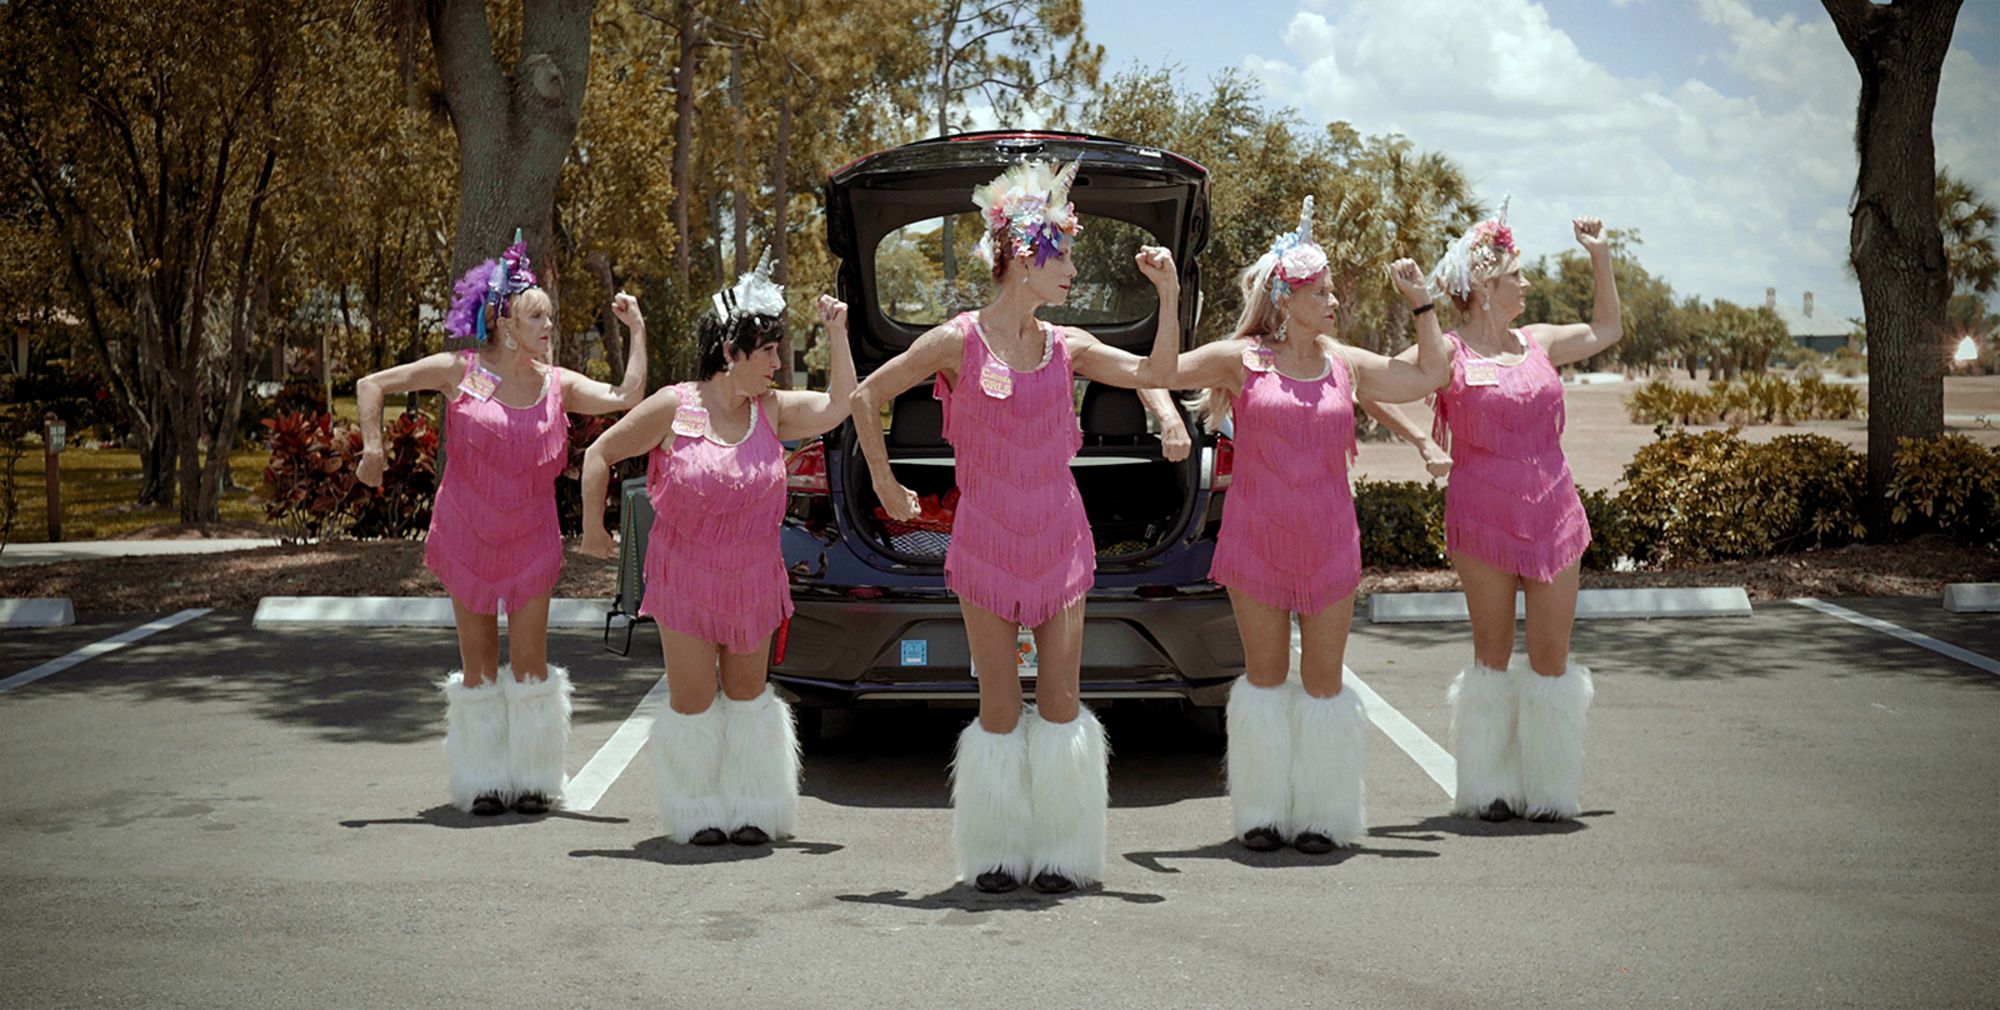 Calendar Girls' documentary follows an exuberant dance troupe of